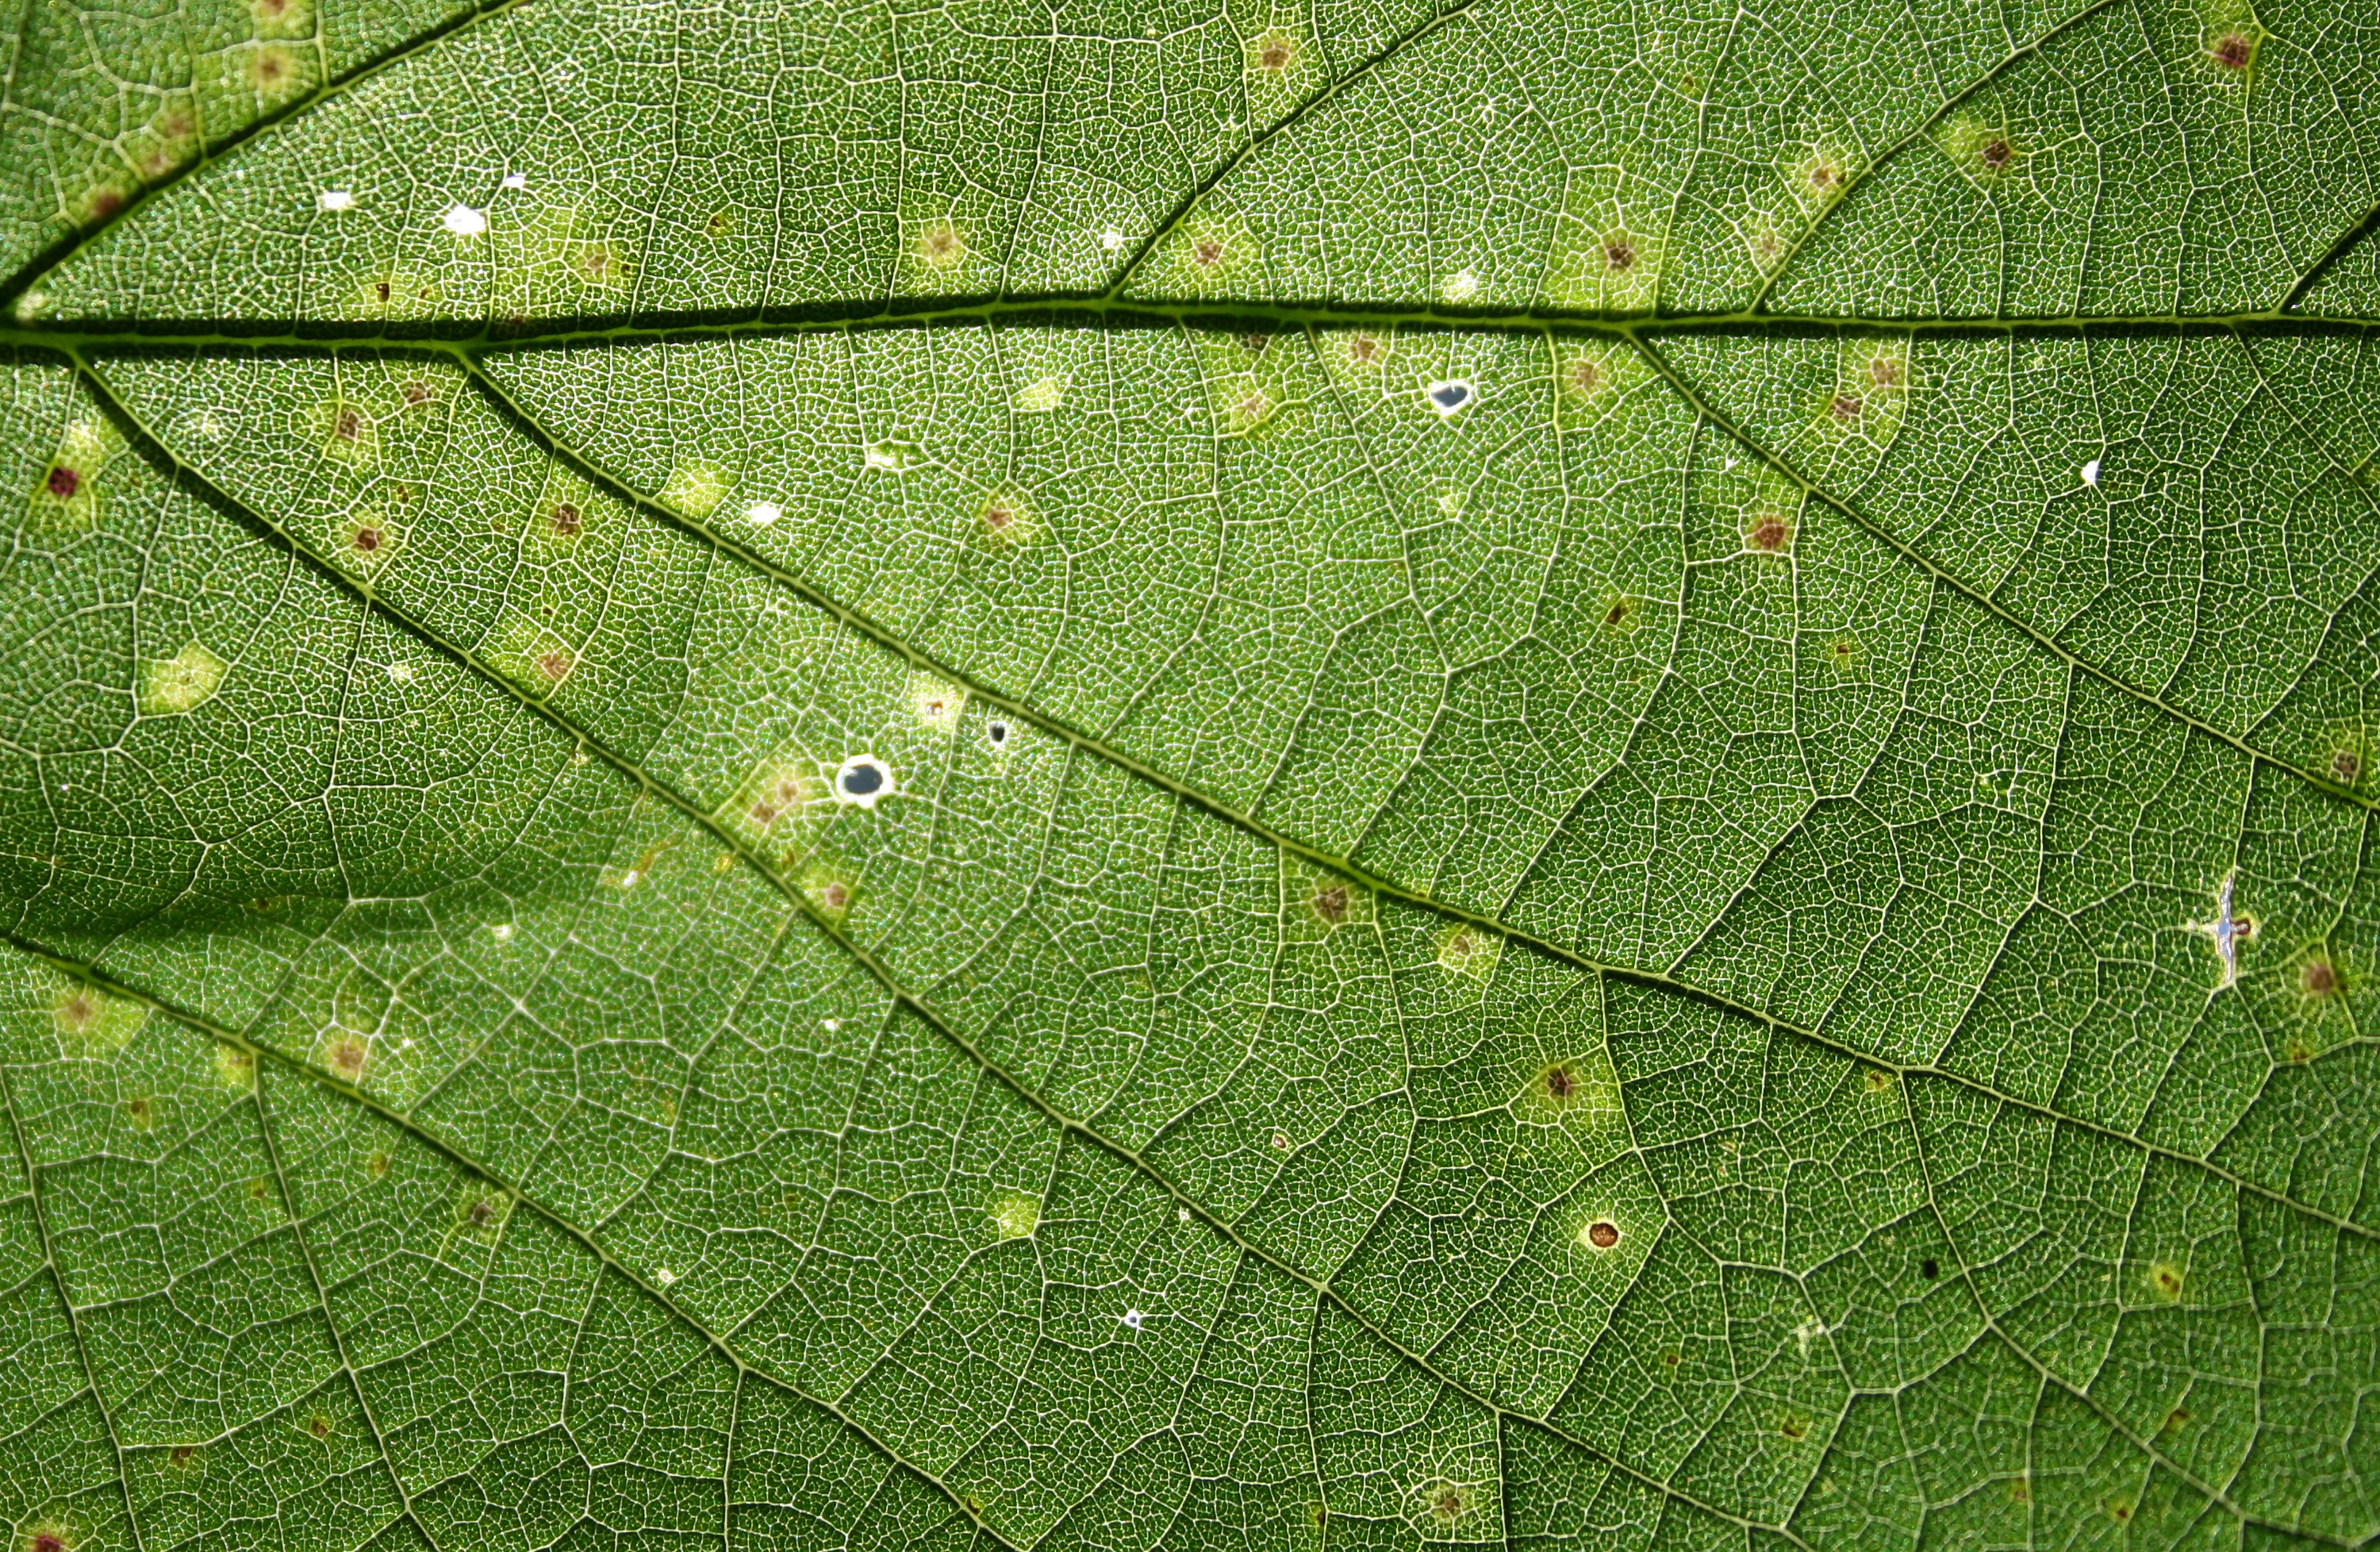 Green leaf texture photo